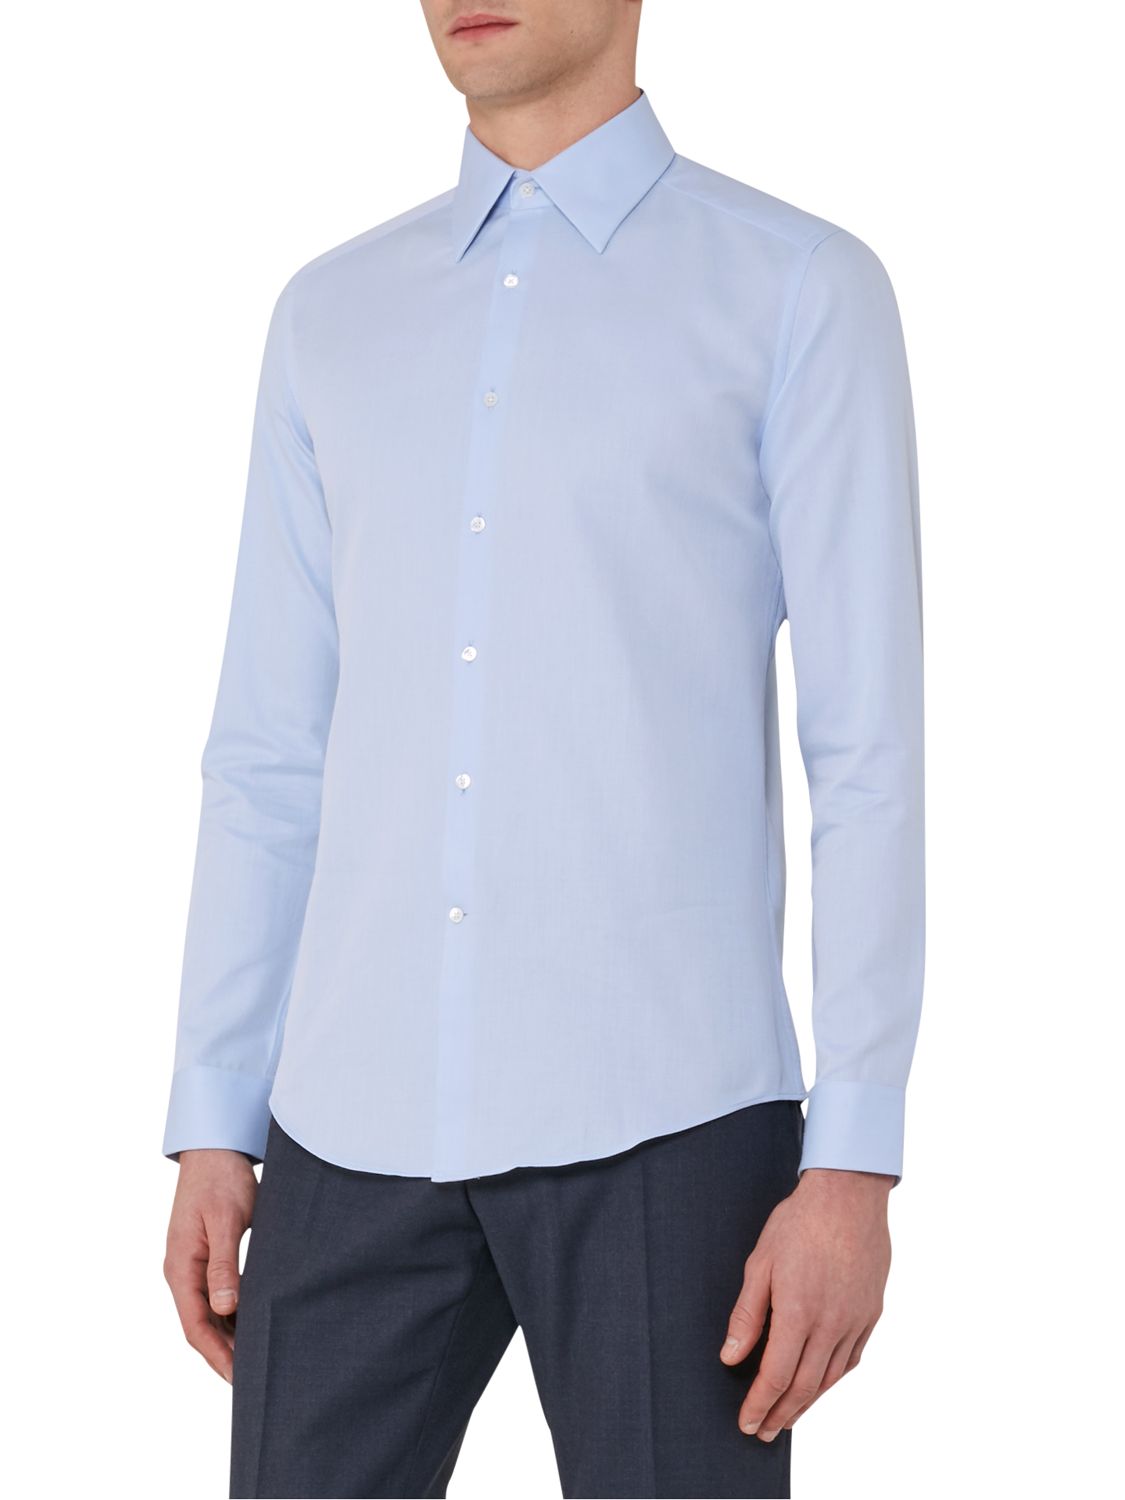 Reiss Colton Large Collar Slim Fit Shirt, Soft Blue